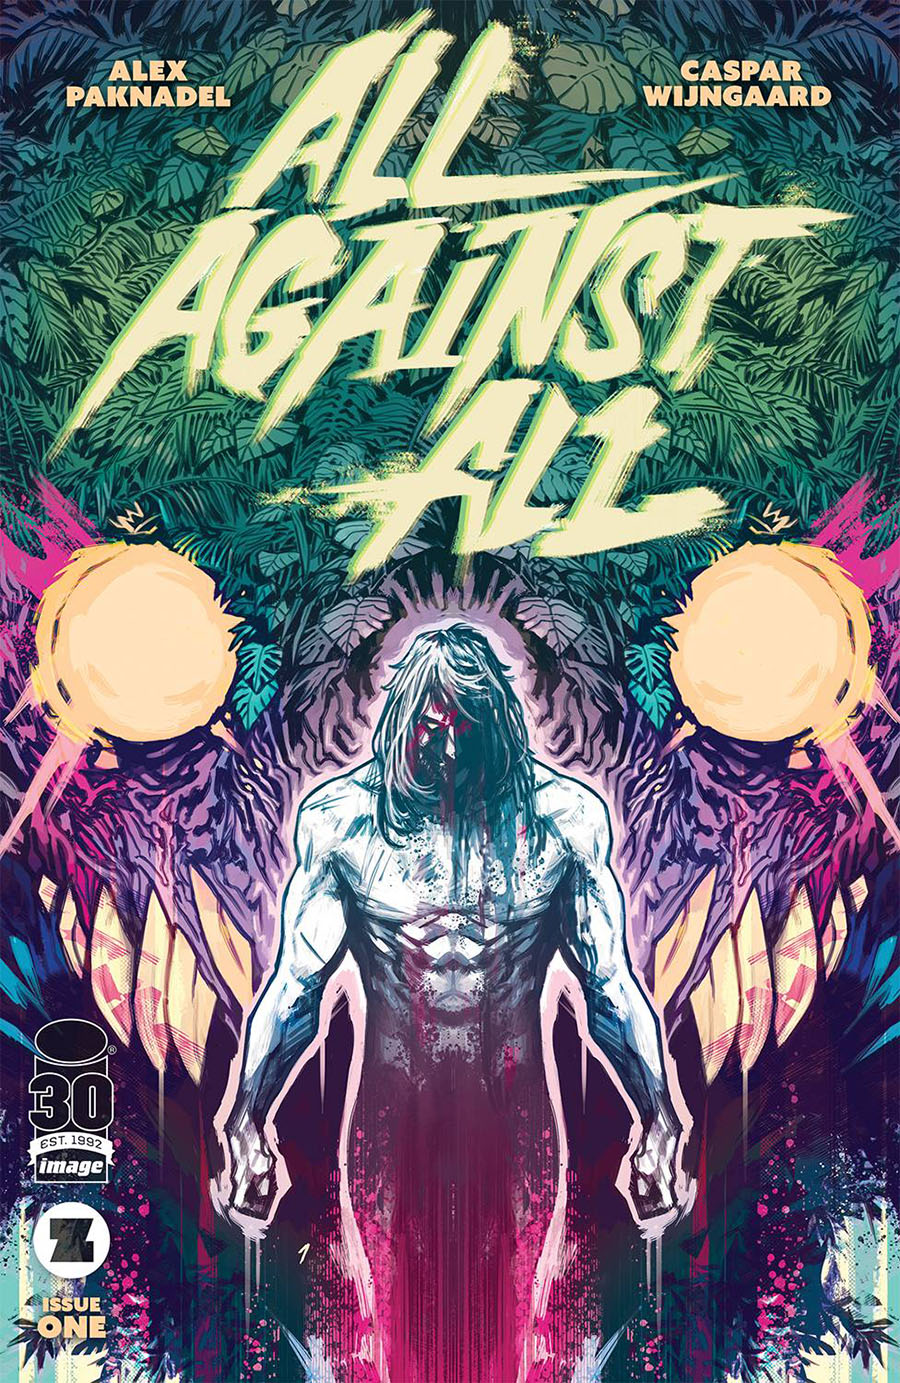 All Against All #1 Cover A Regular Caspar Wijngaard Cover